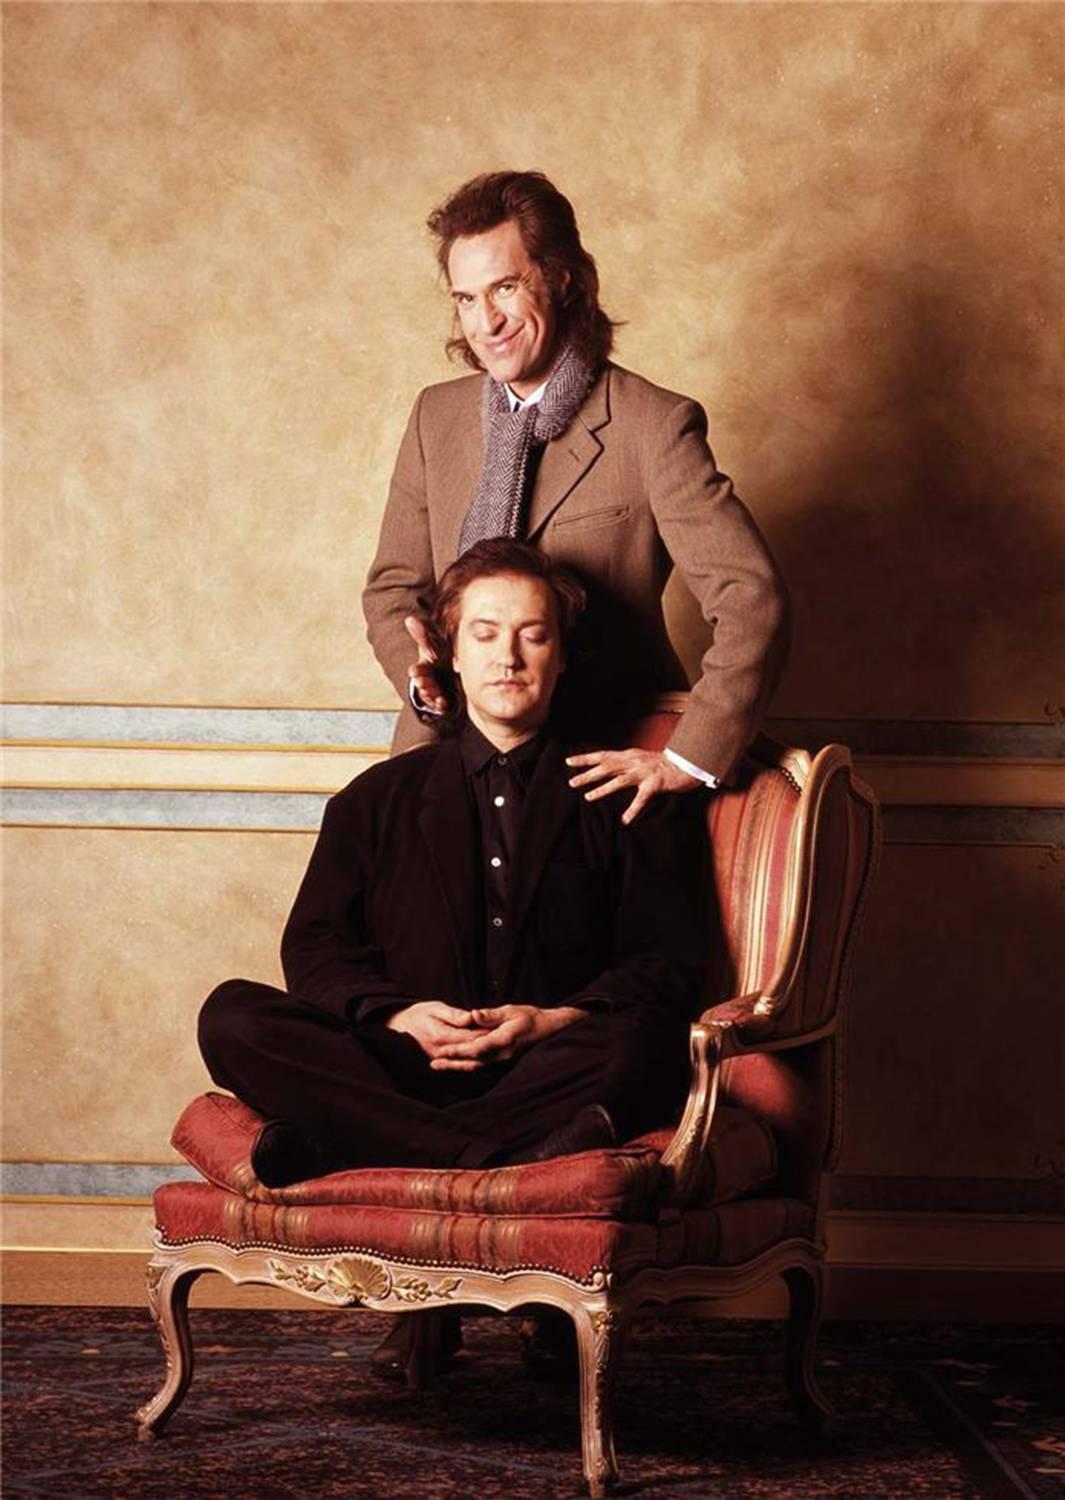 Guido Harari Portrait Photograph – Dave und Ray Davies, The Kinks, Mailand, 1993